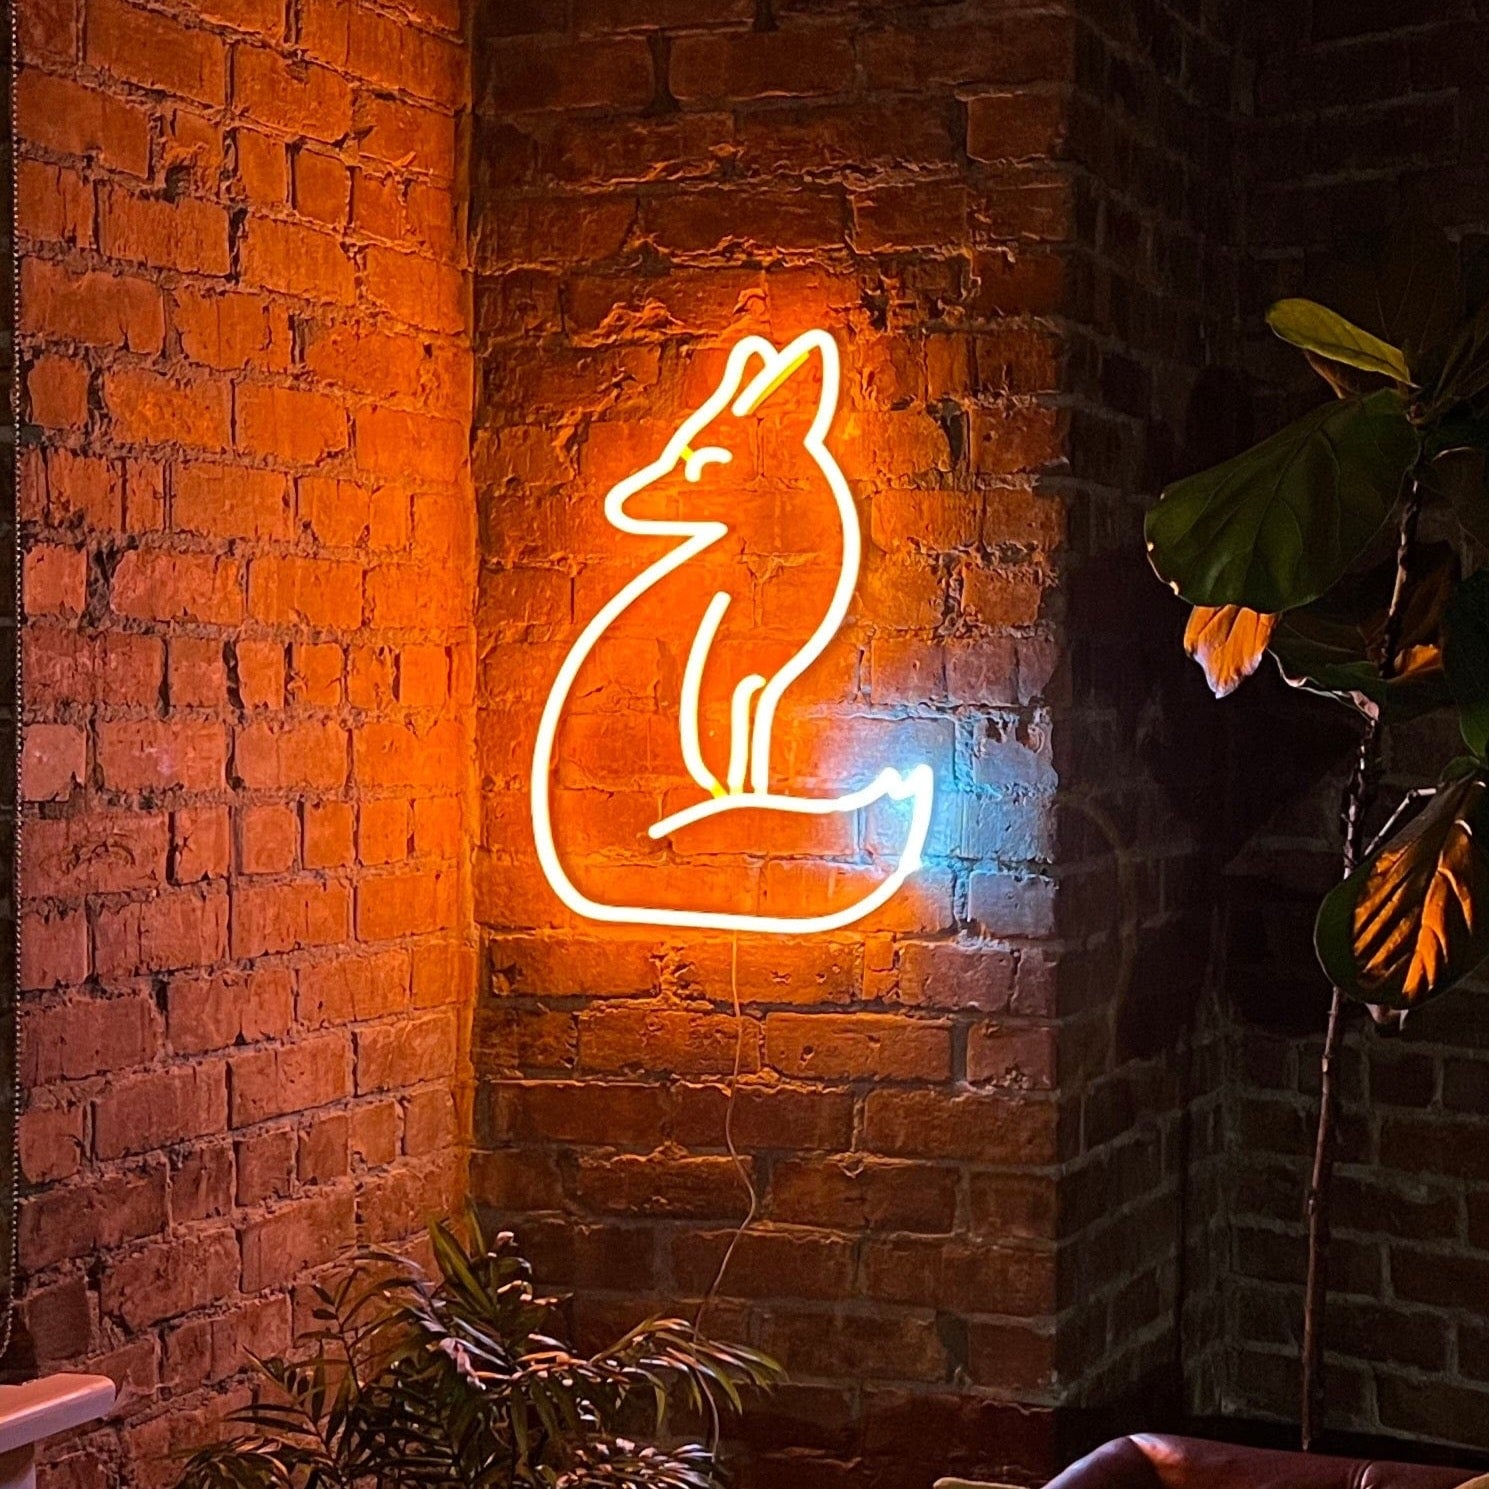 Fox LED Neon Sign